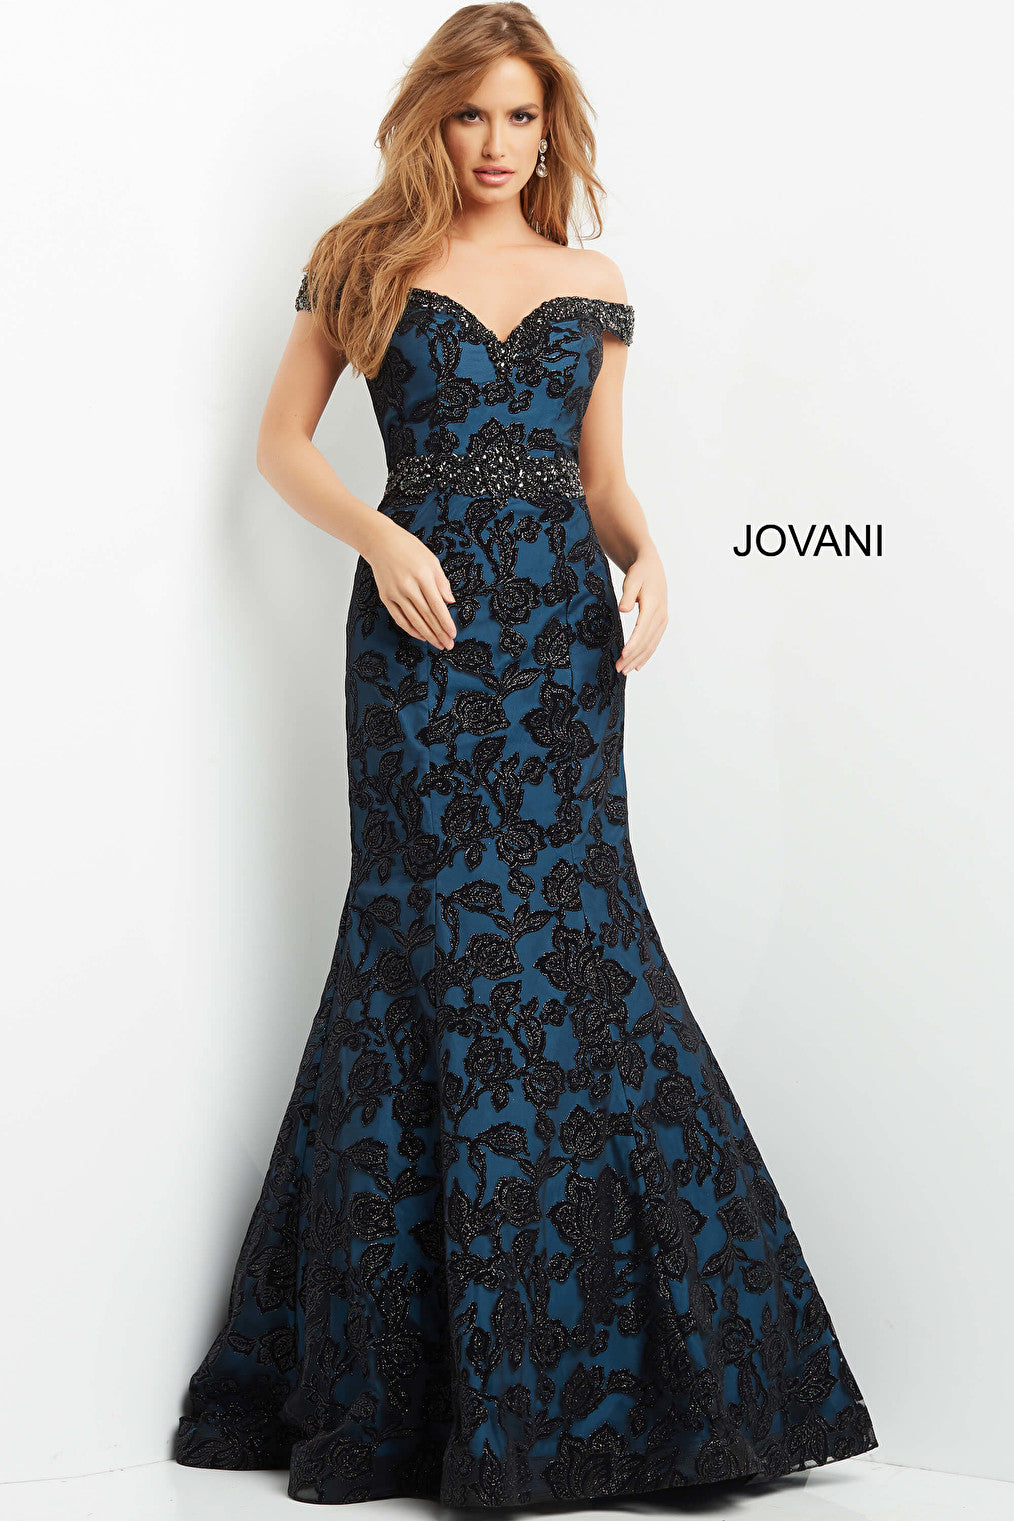 Jovani 07061 Black Café Off The Shoulder Mermaid Evening Gown